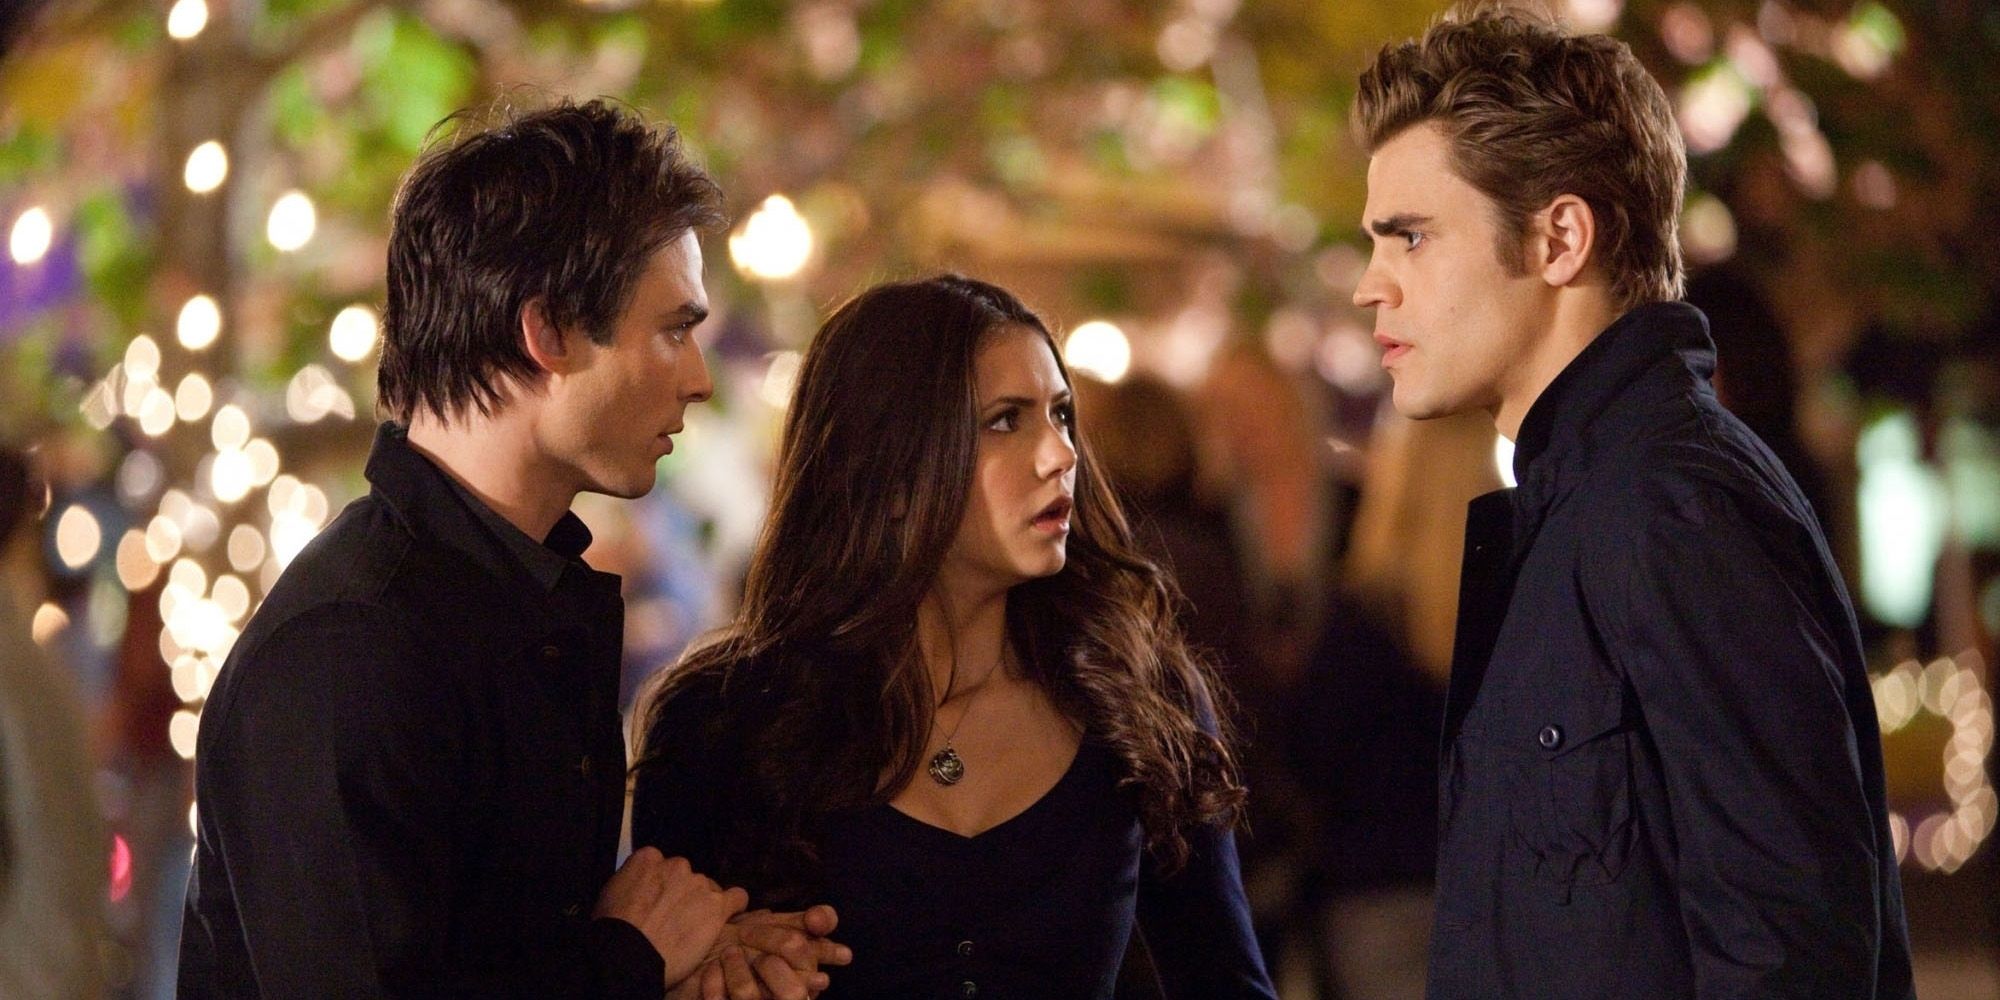 Elena looks between Damon and Stefan in The Vampire Diaries.